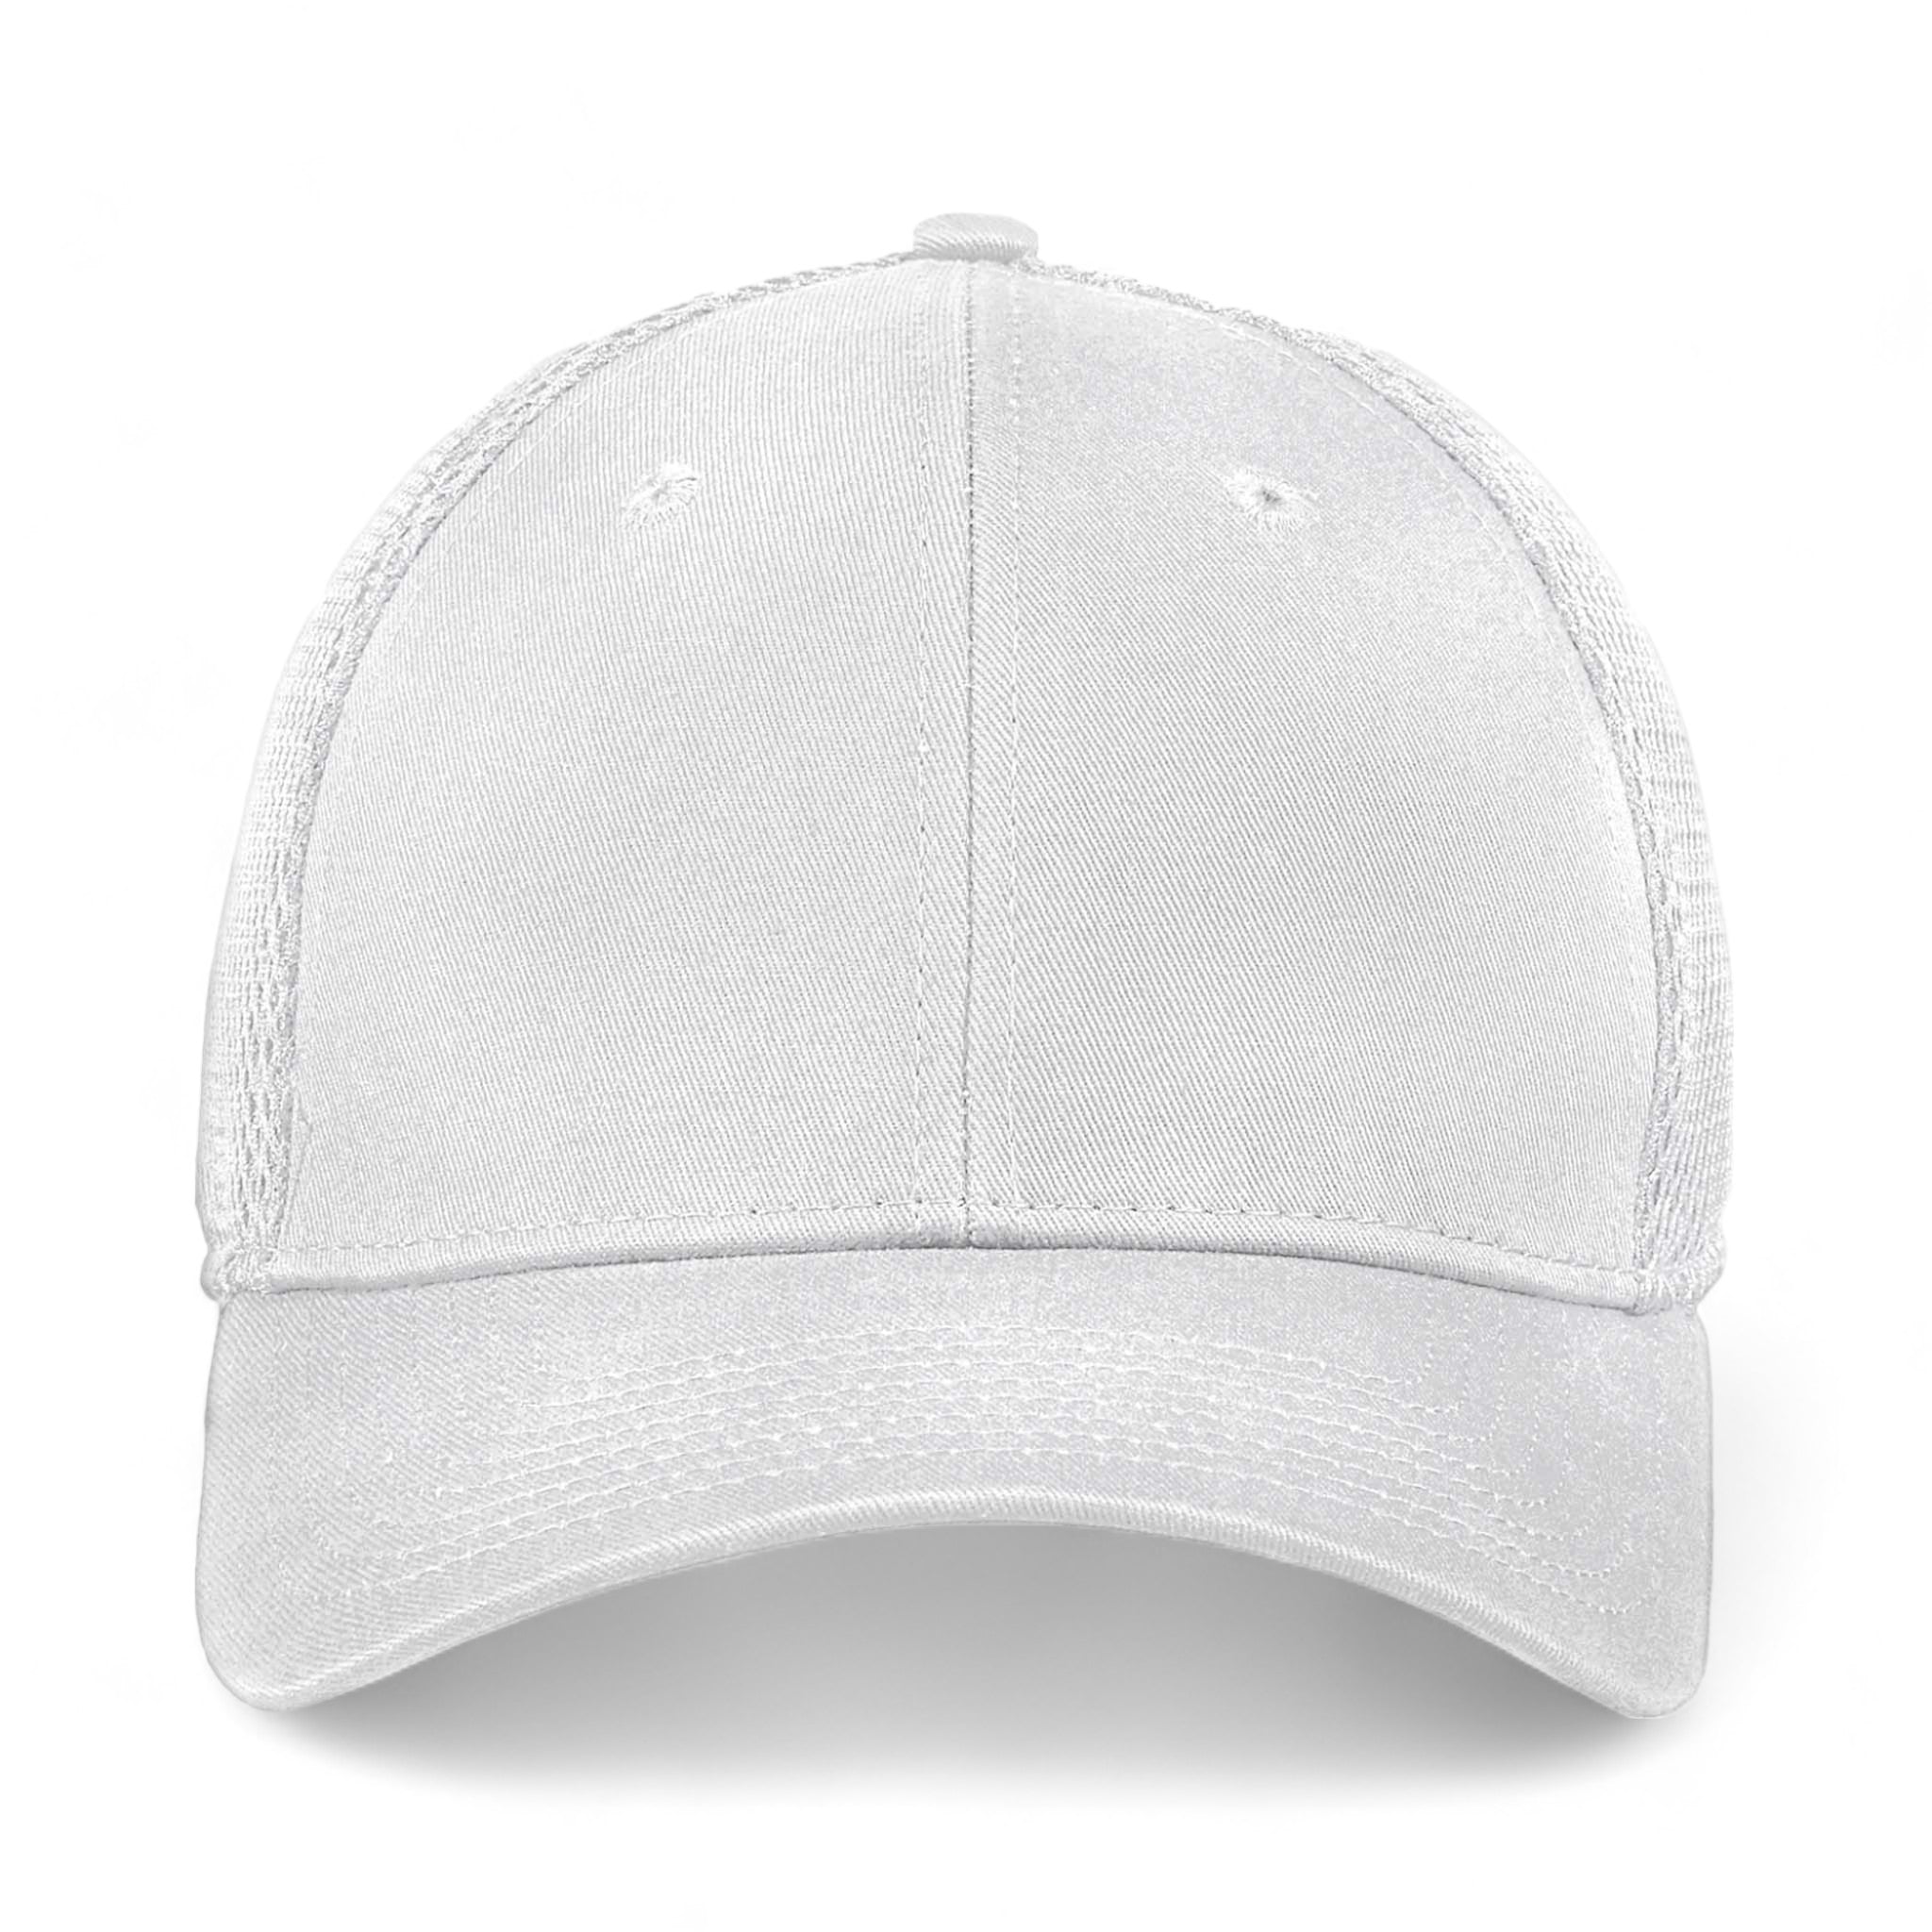 Front view of New Era NE1020 custom hat in white